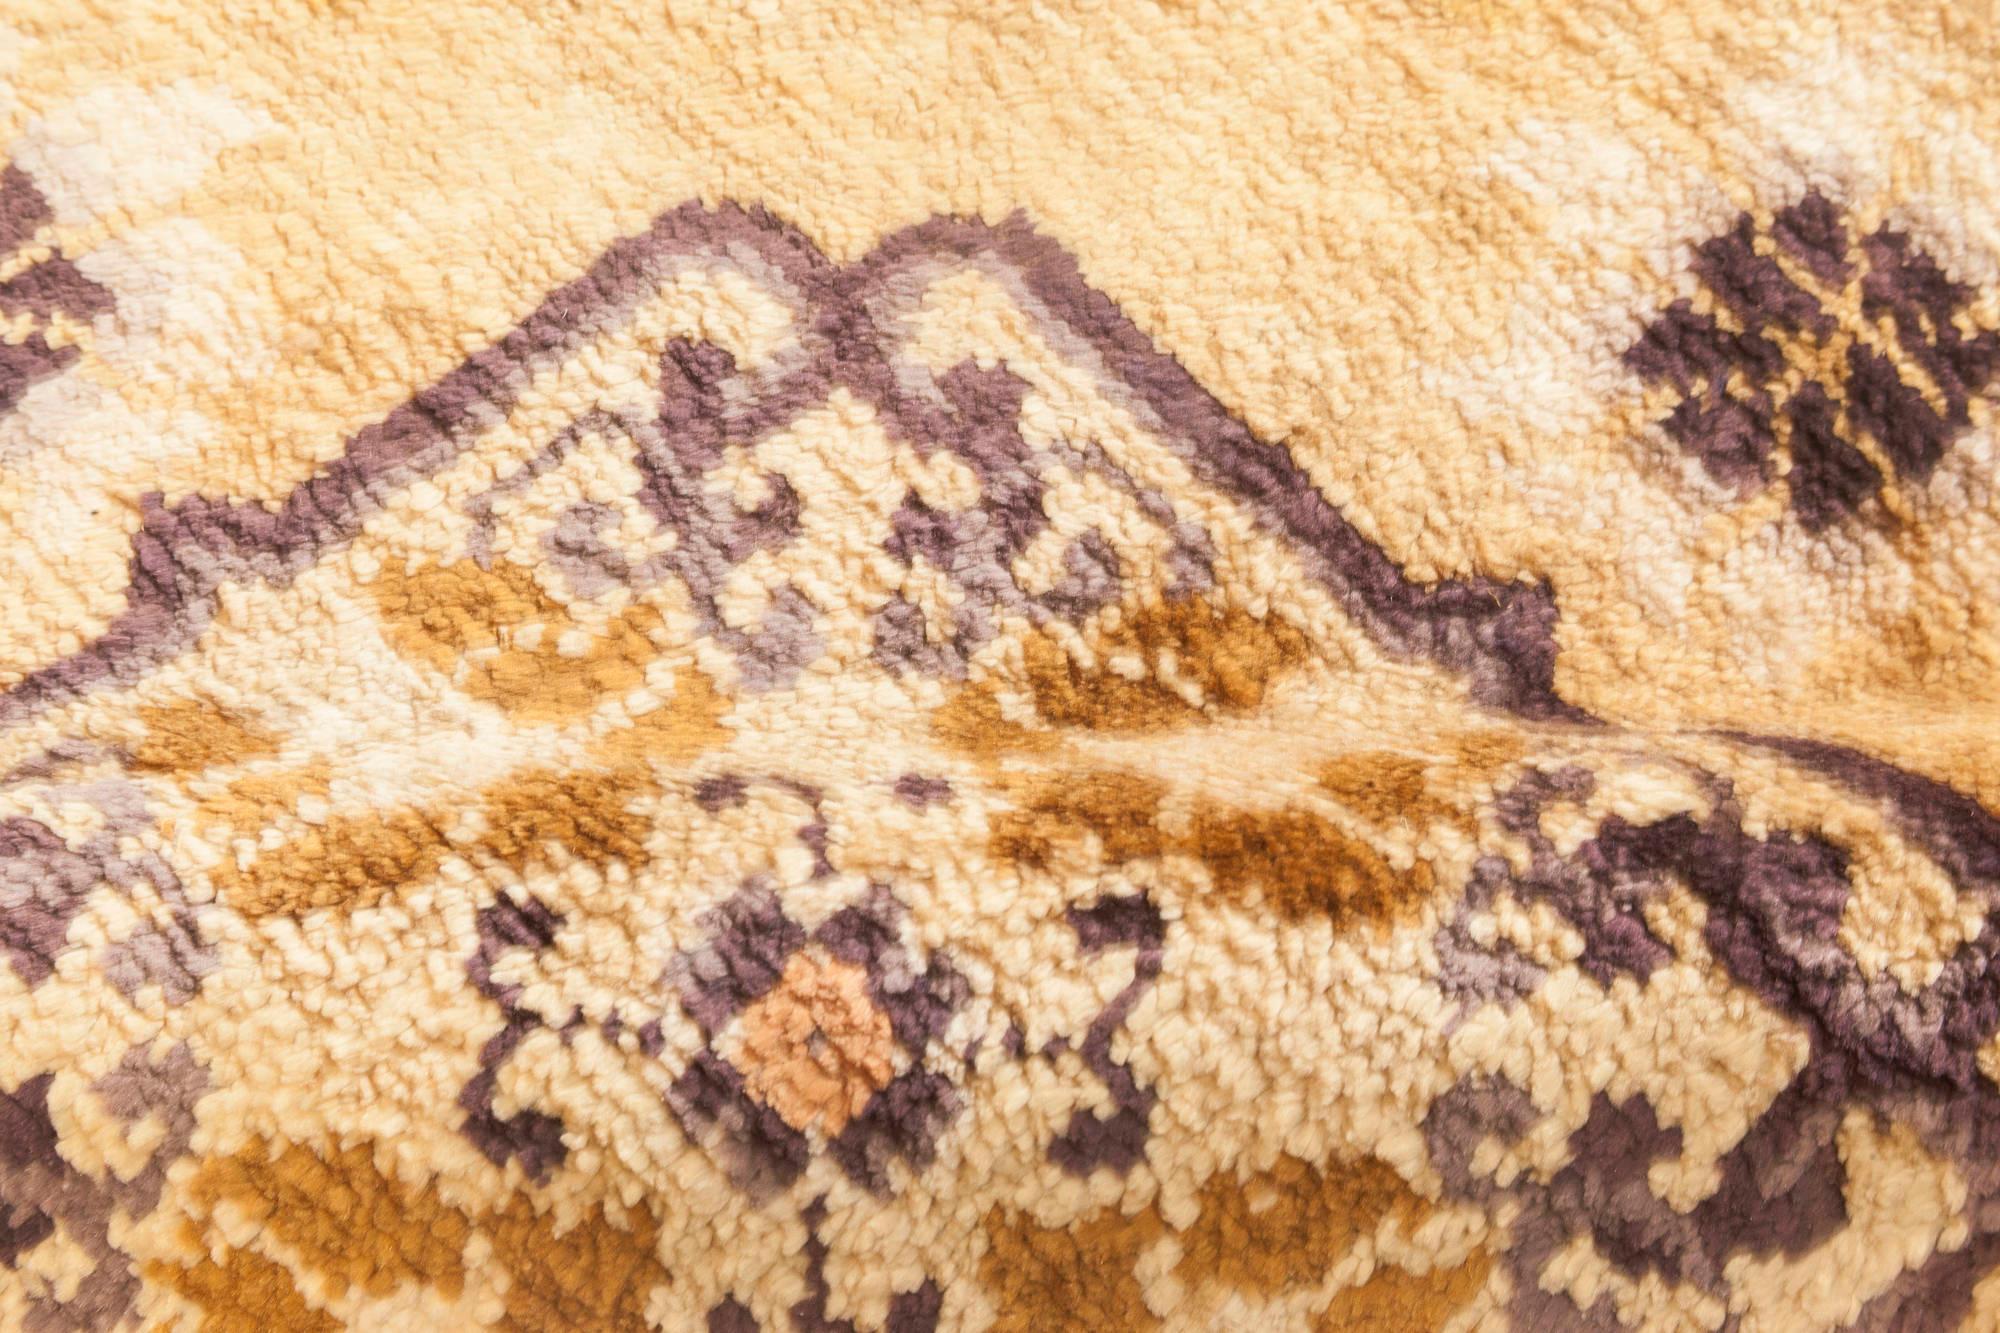 Authentic 1900's Chinese geometric handmade rug
Size: 4'1